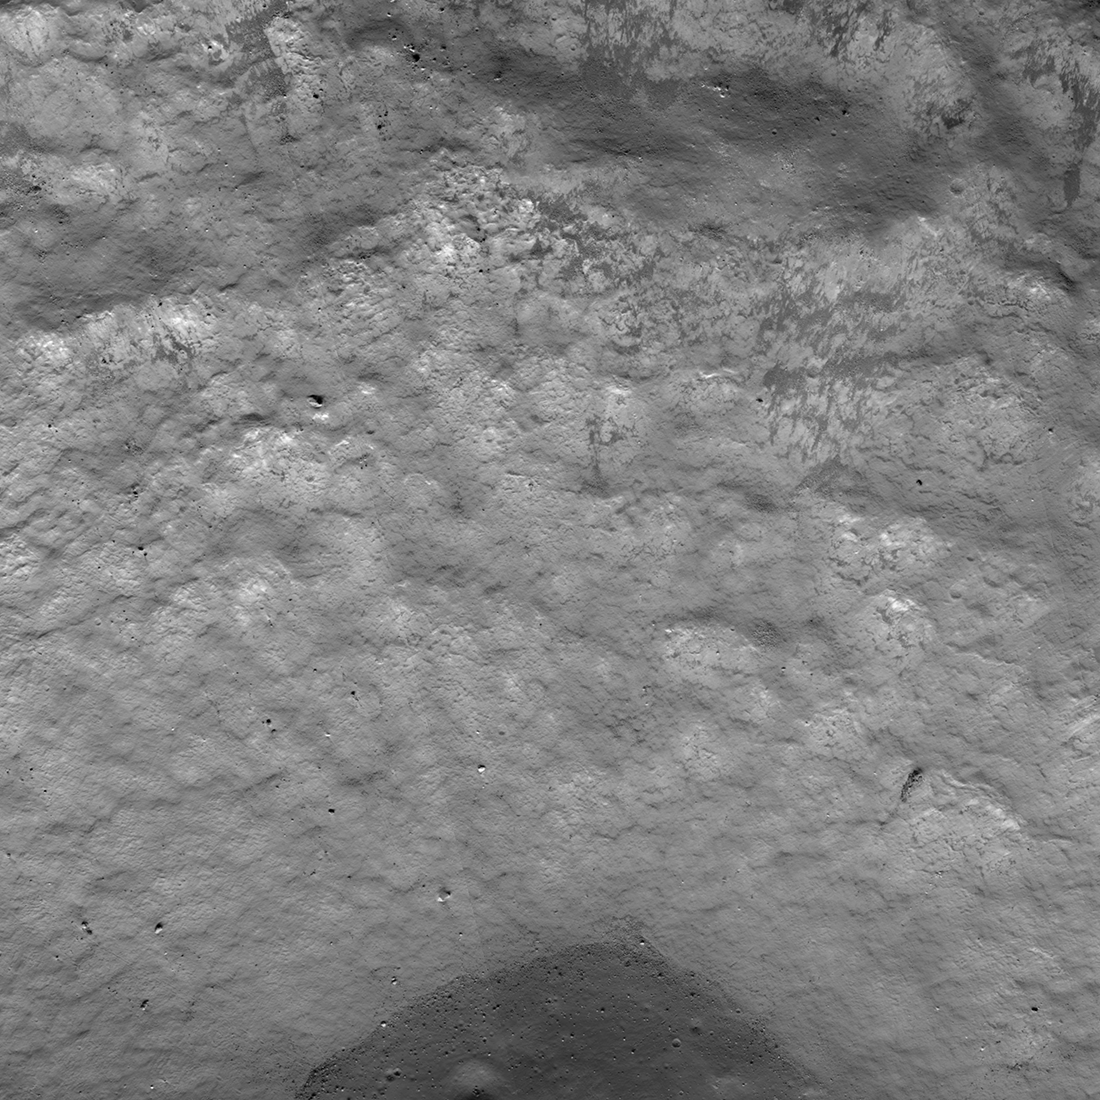 PSR within not named 12 km diameter crater 84.8N, 187.7E